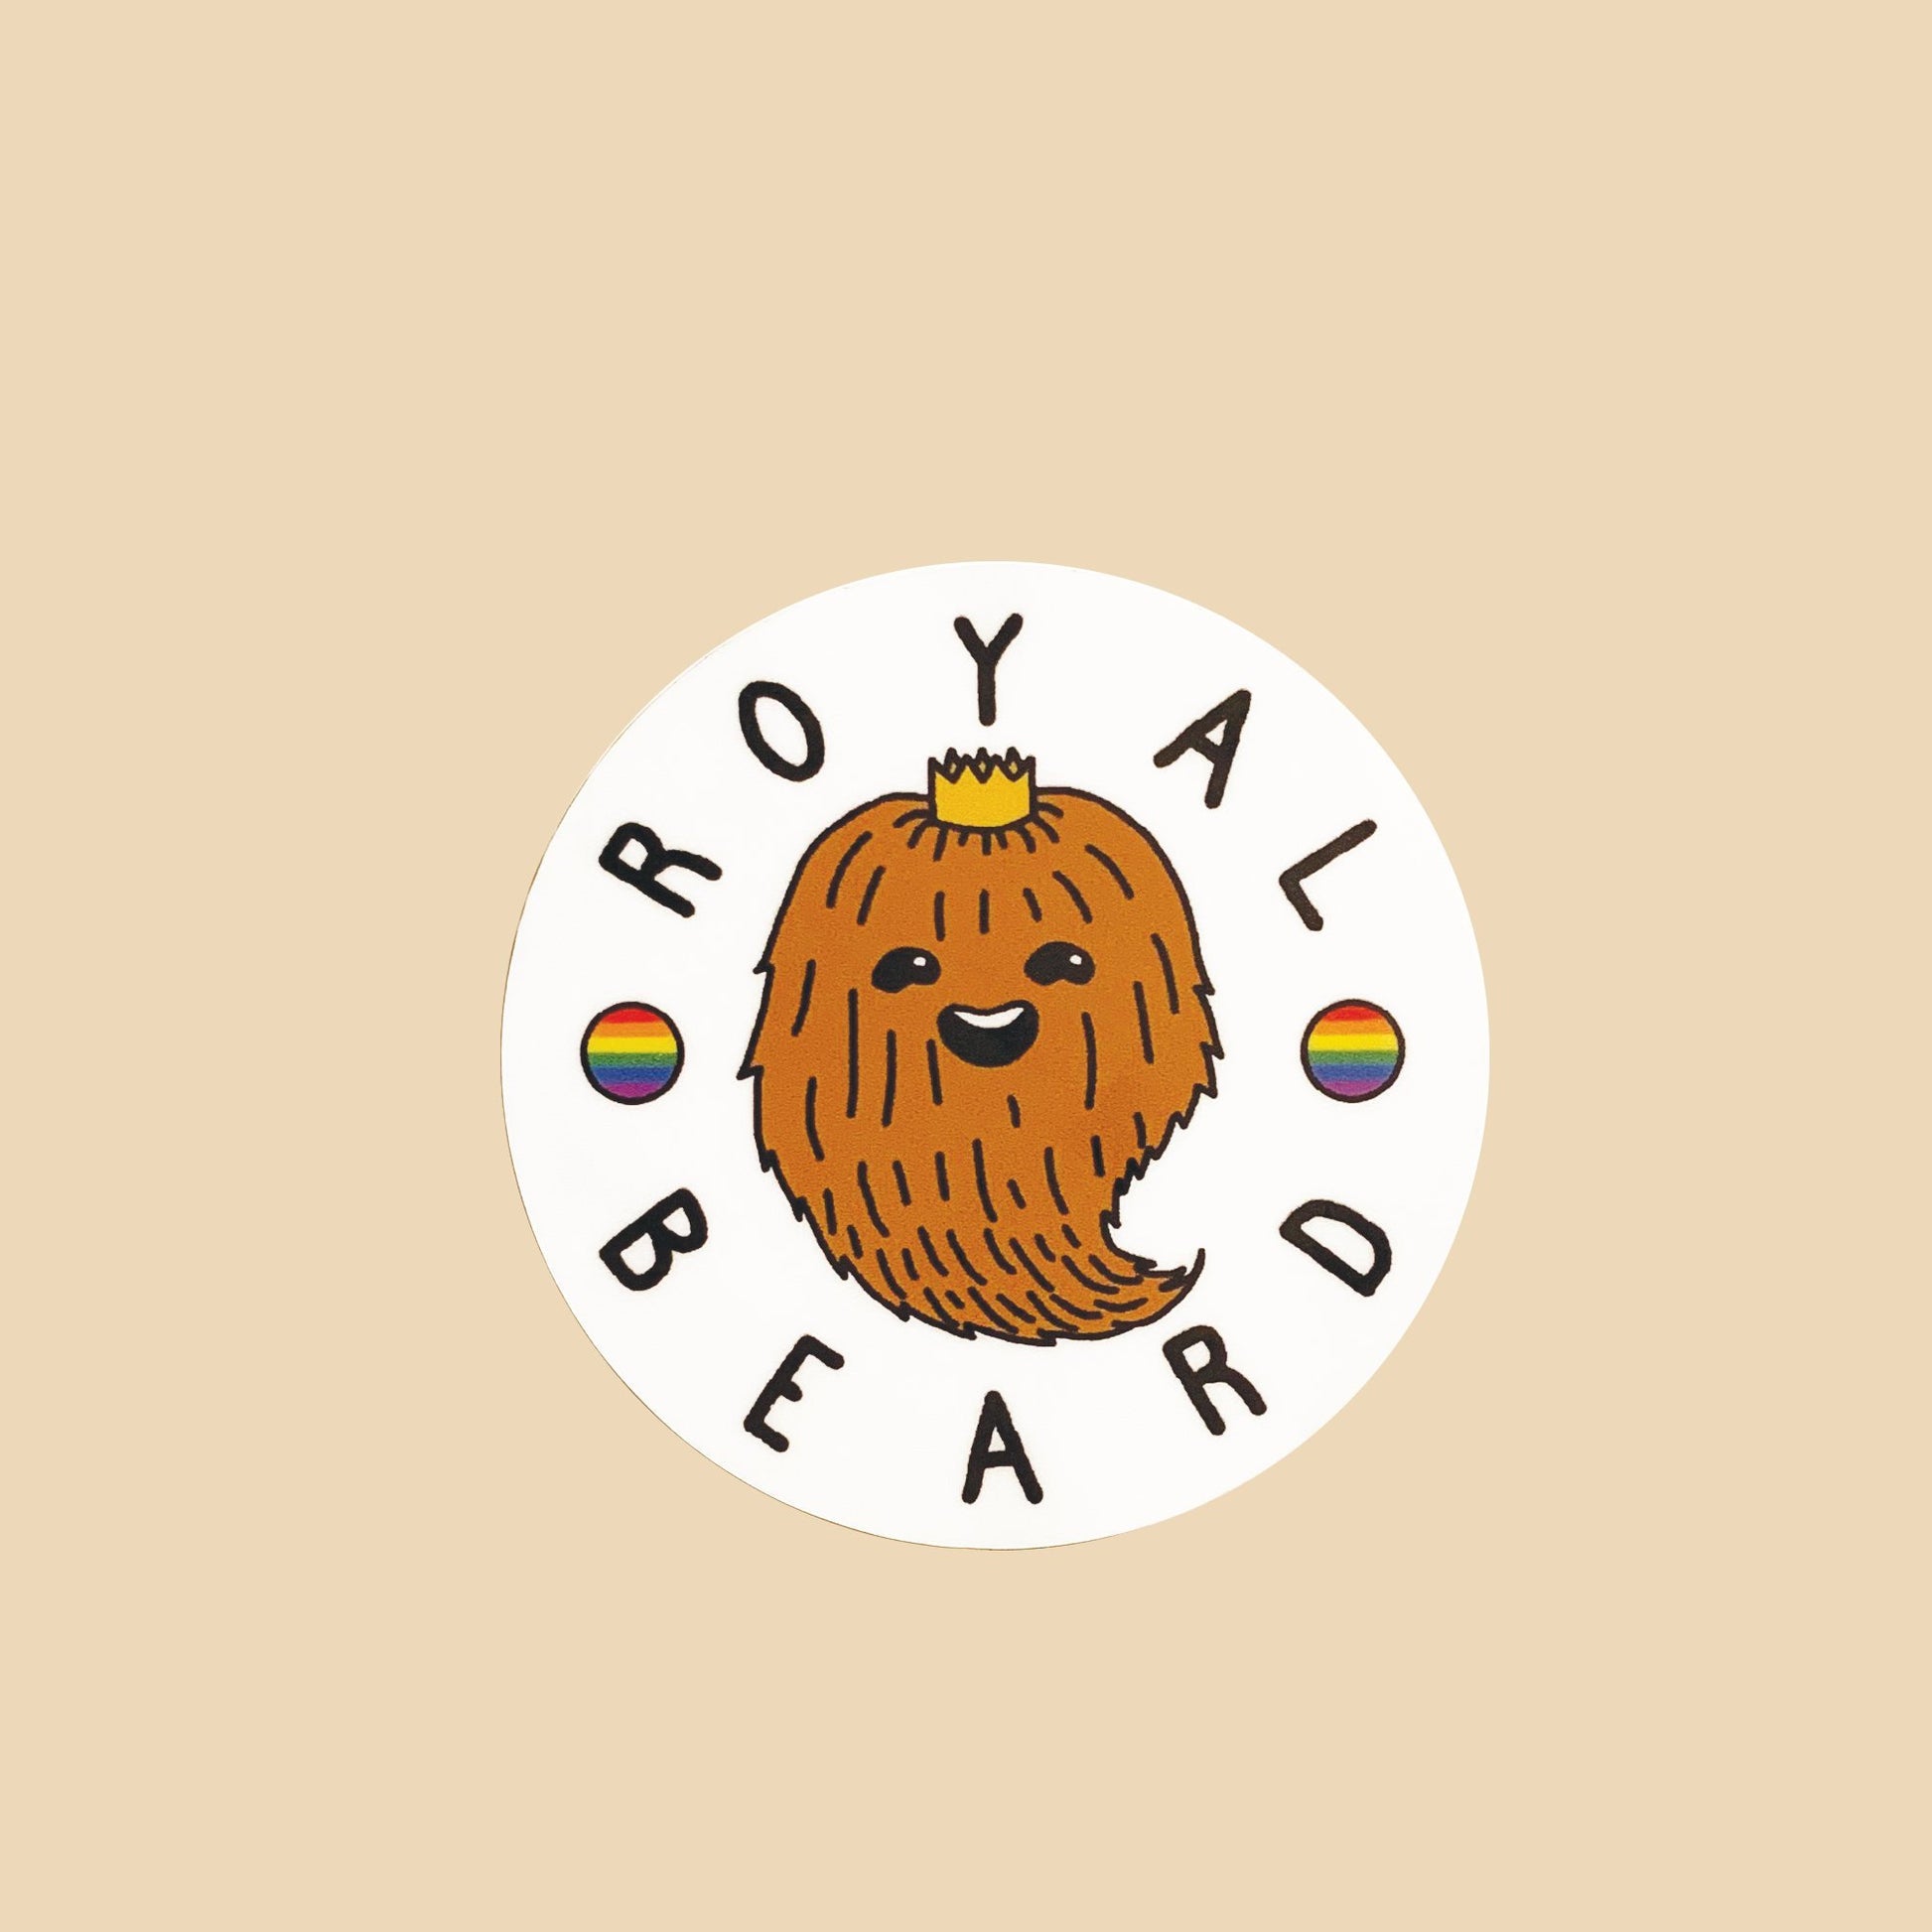 LGBTQ-Vinyl-Sticker-Royal-Beard-Round-Gay-Pride